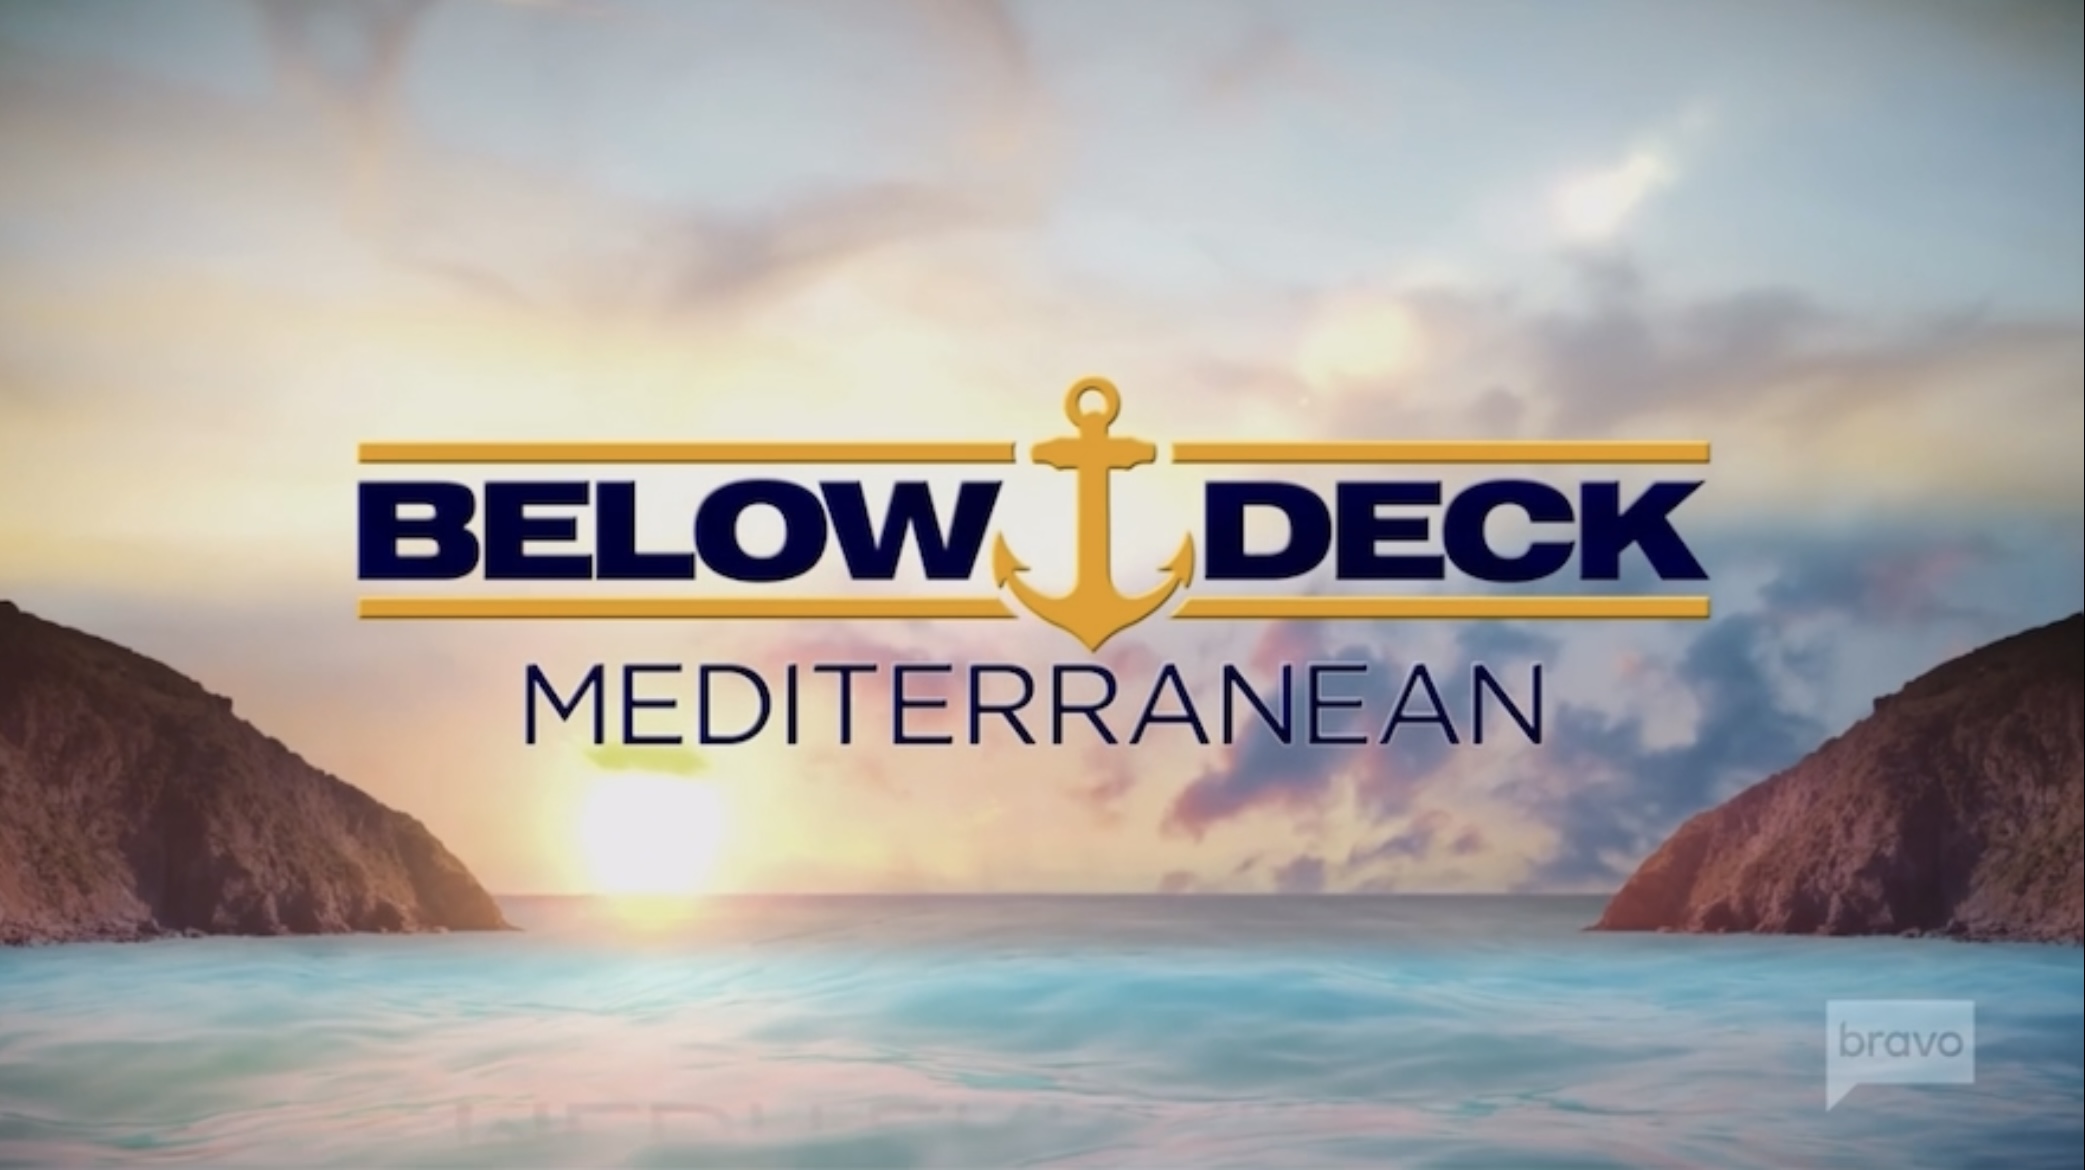 Below Deck Med Season 7 trailer, Below Deck Mediterranean Season 7 trailer, Below Deck Med Season 7 cast, Below Deck Mediterranean Season 7 cast, Captain Sandy Yawn, Mzi Zee Dempers, Bravo TV, Below Deck